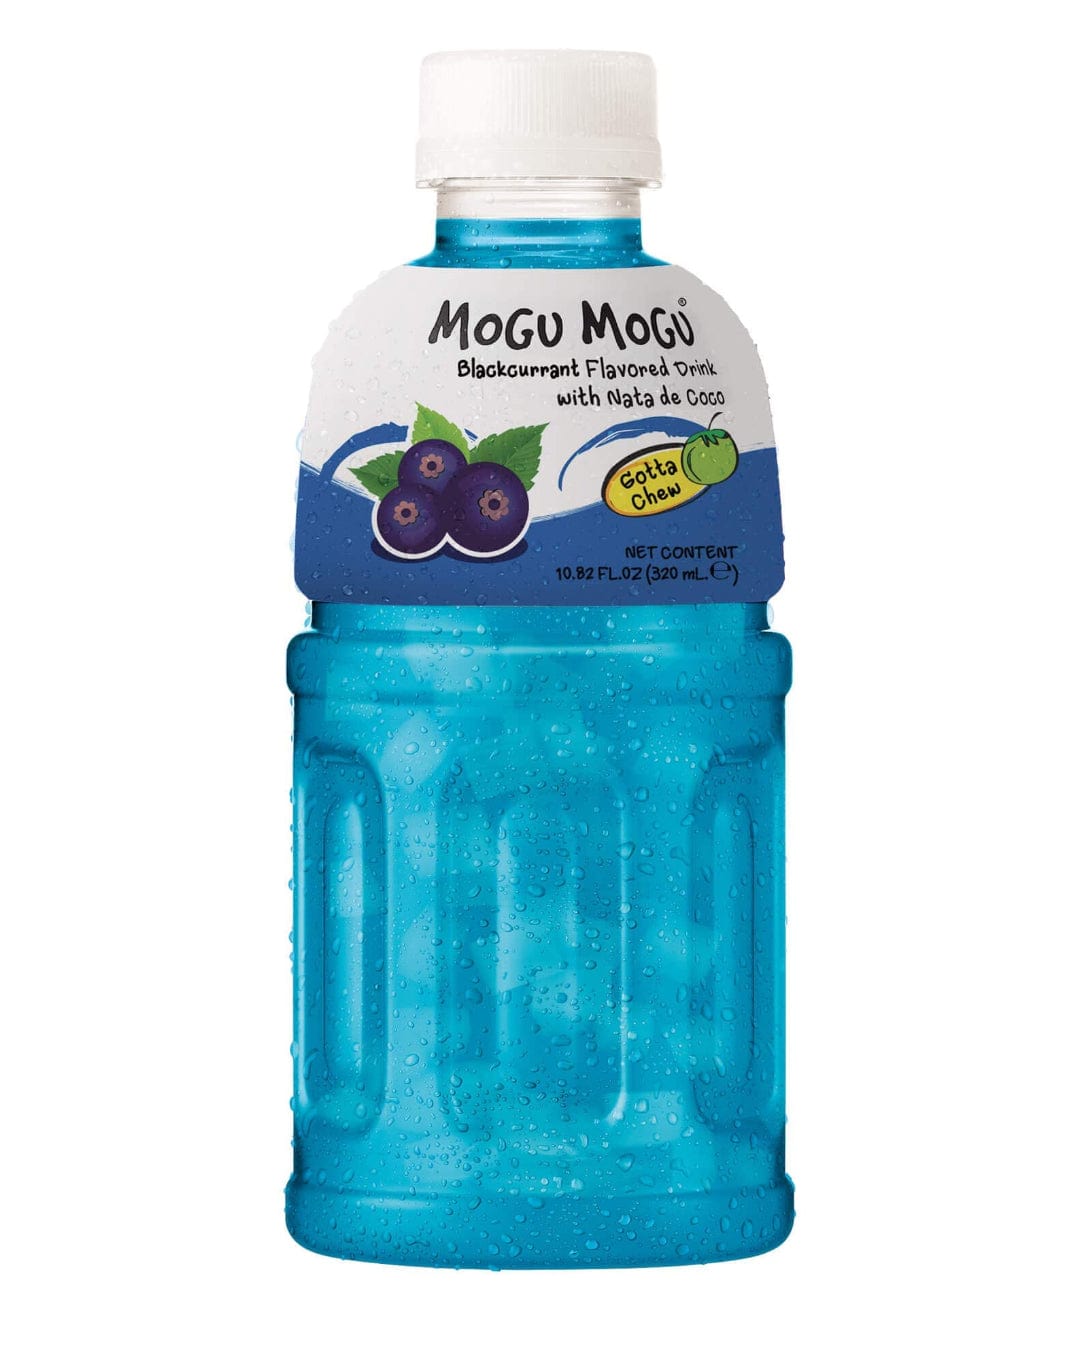 Mogu Mogu Blackcurrant Drink Multipack, 6 x 320 ml Soft Drinks & Mixers